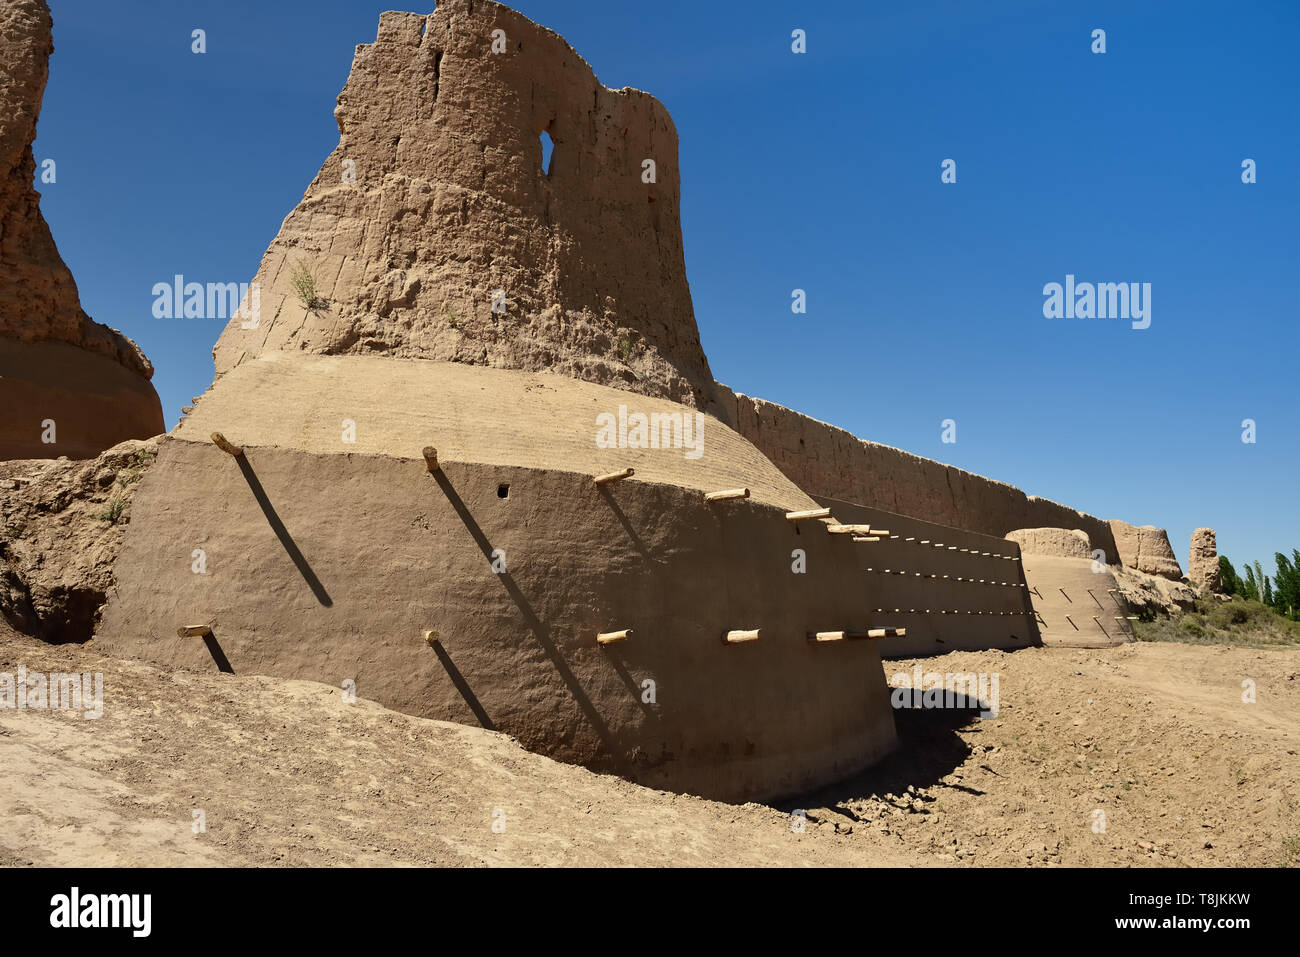 The ruins castles of ancient Khorezm – Guldursun - Kala, restored mud curtain walls, Uzbekistan. Stock Photo